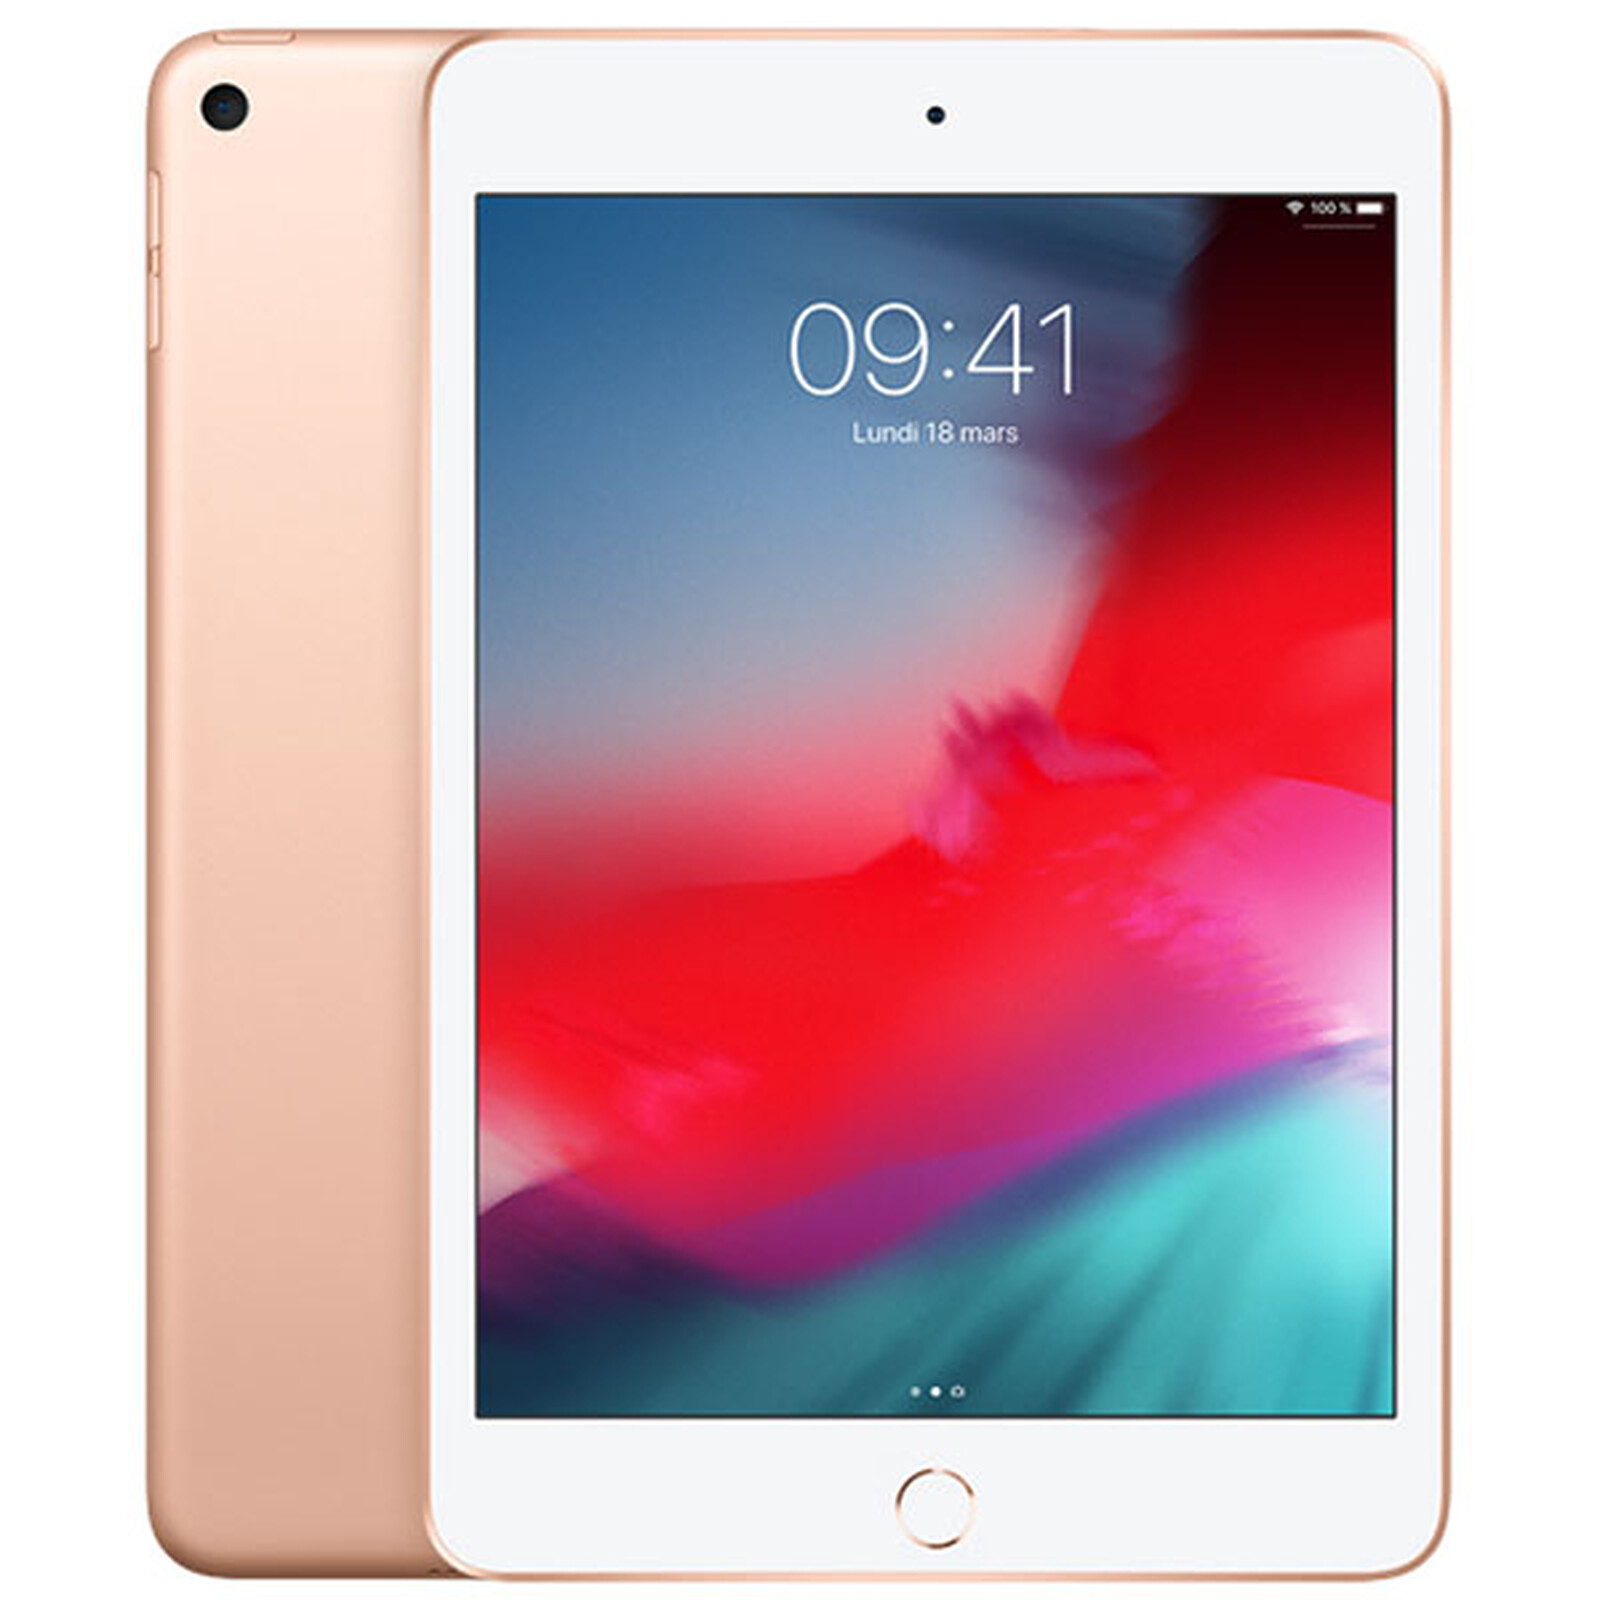 prioridad exilio Kilimanjaro Apple iPad mini 5 Wi-Fi 256 GB Gold - Tablet Apple en LDLC | ¡Musericordia!